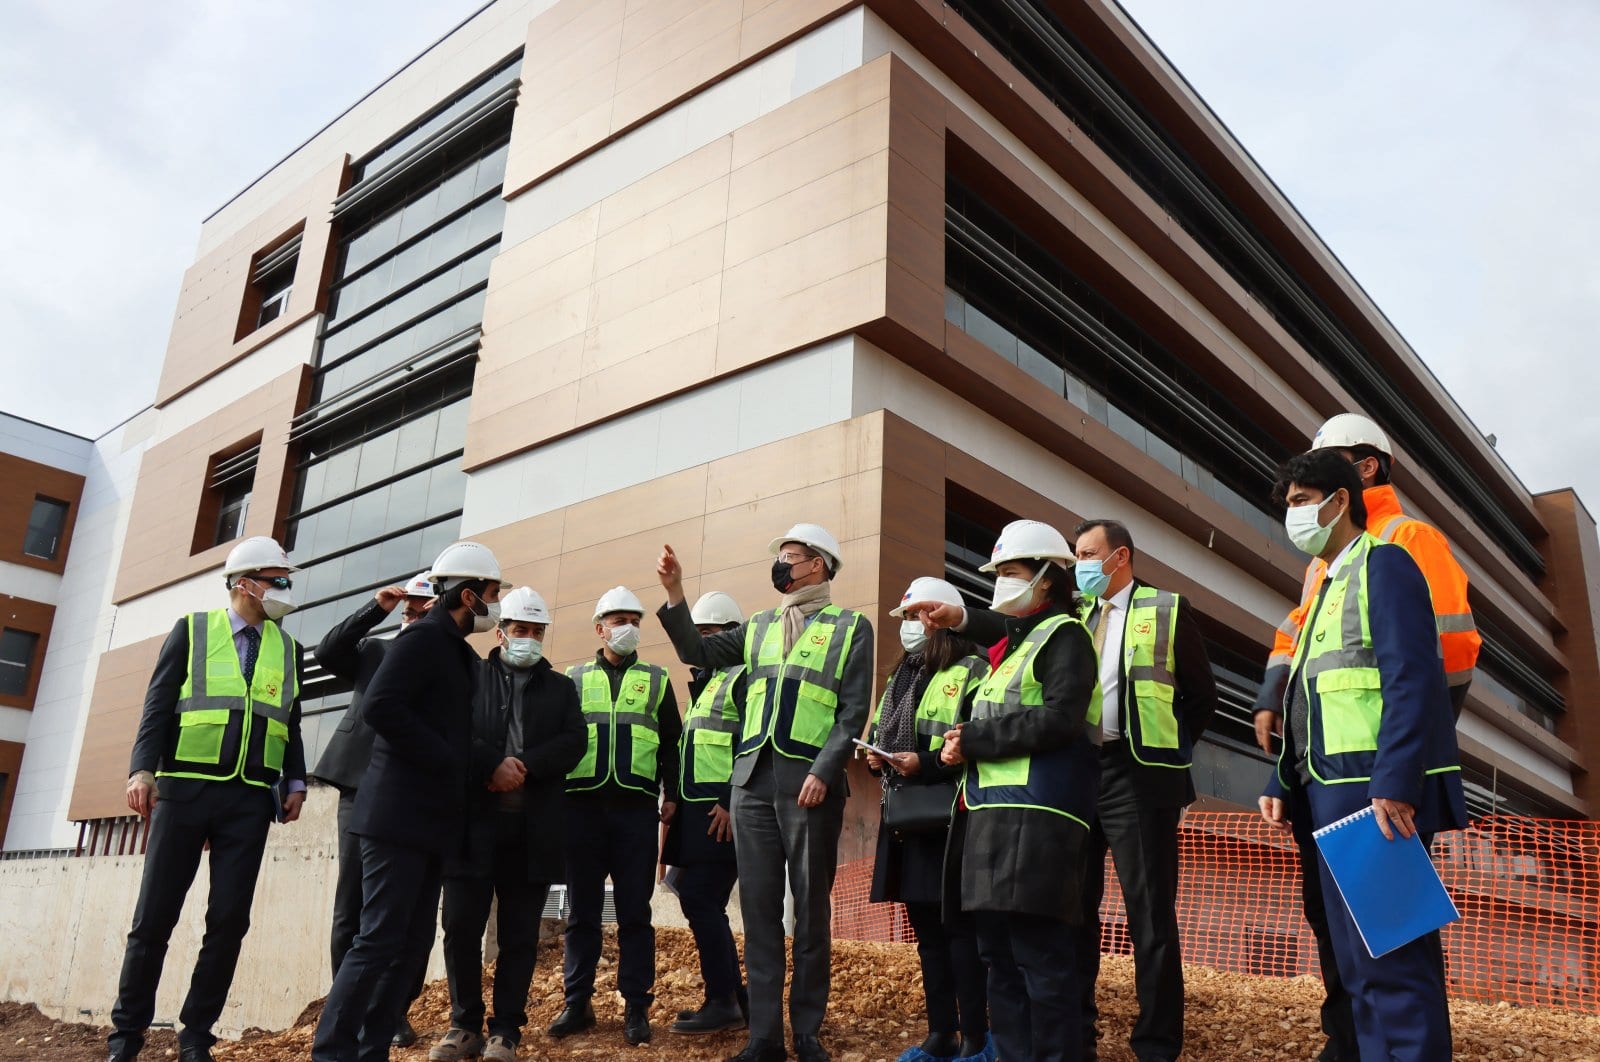 EU envoy visits site of new state hospital in Turkey’s Kilis